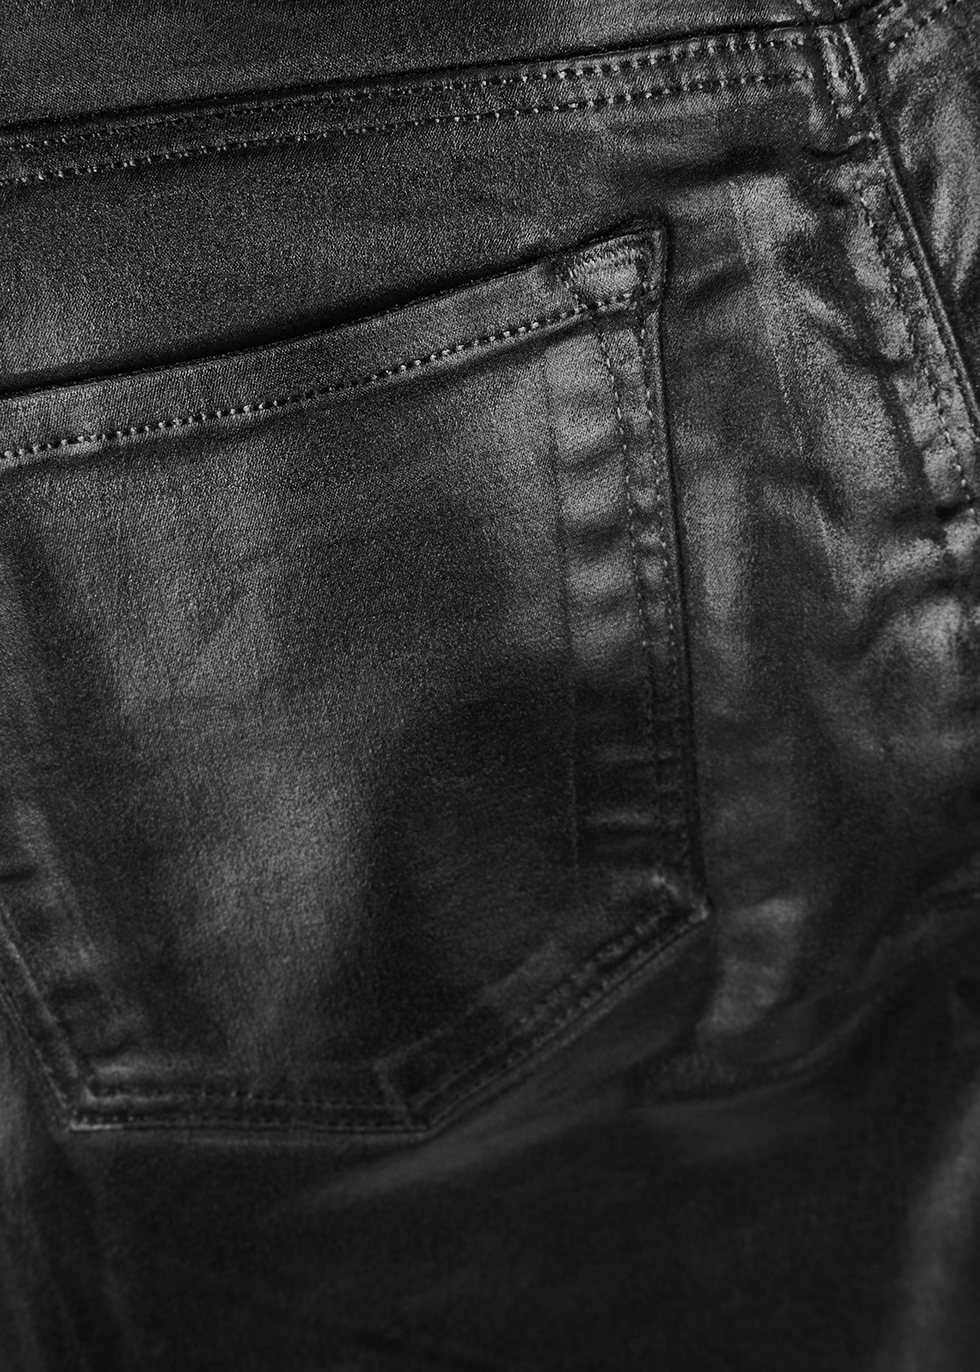 j brand black coated jeans